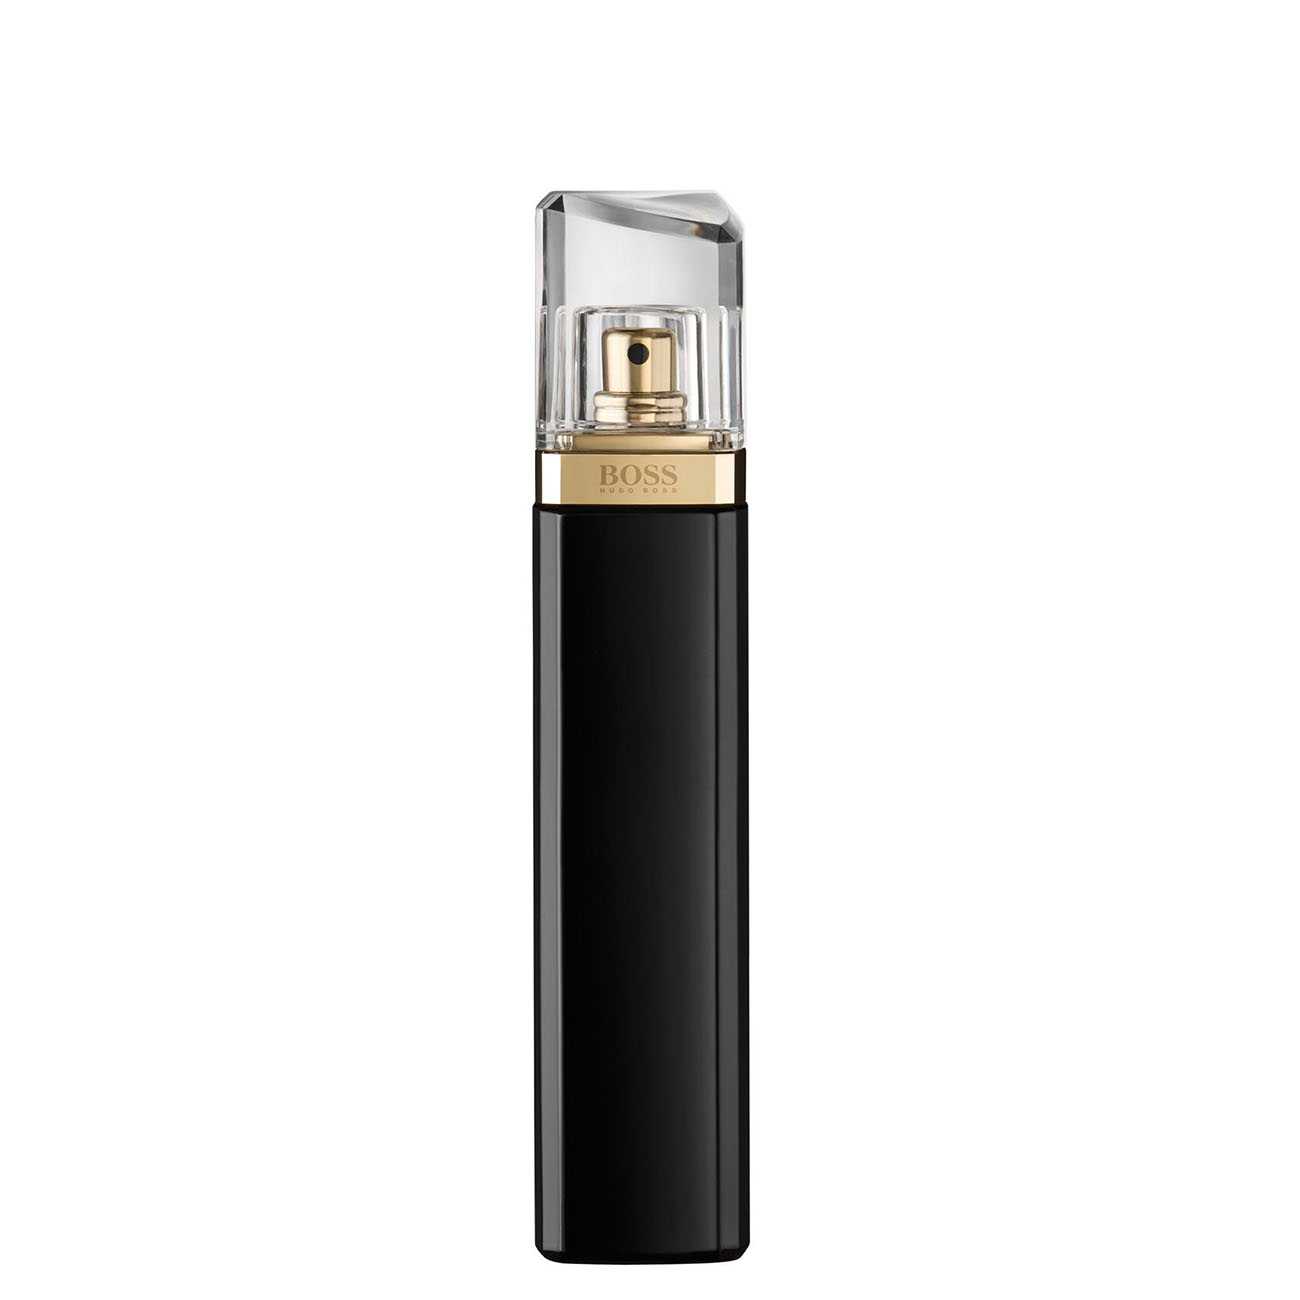 Apa de Parfum Hugo Boss NUIT 50 ML 50ml cu comanda online